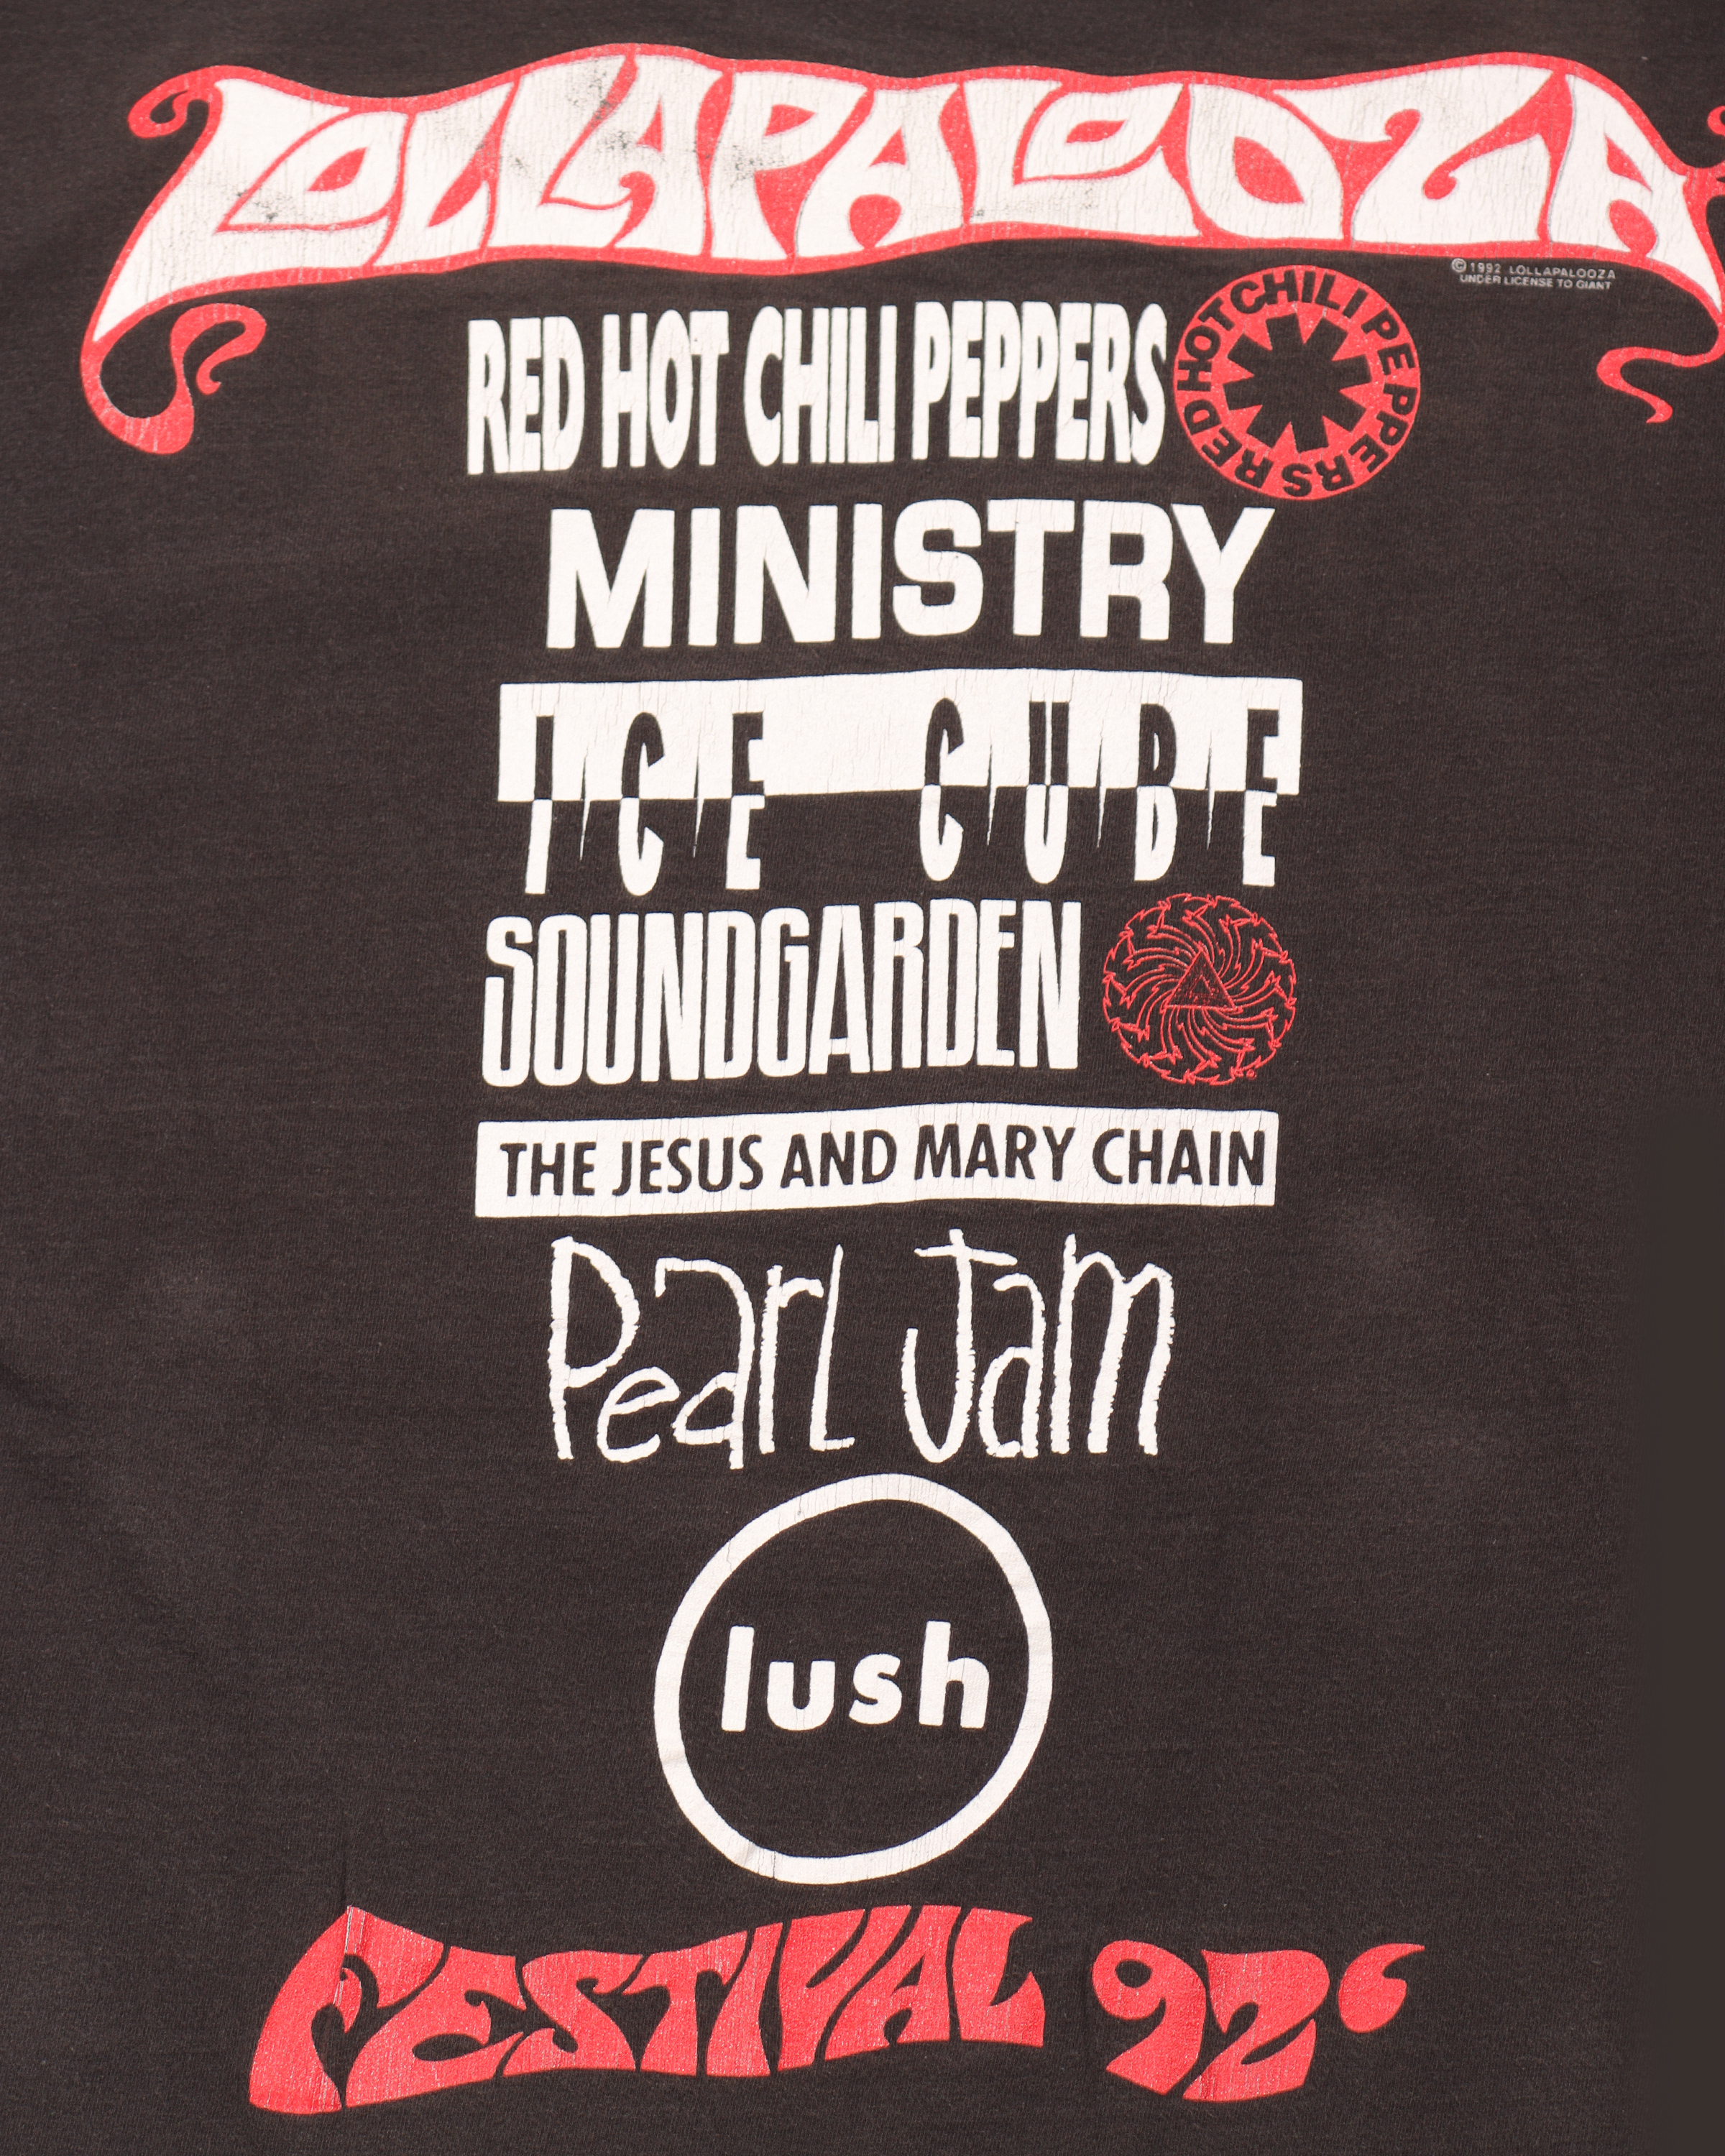 1992 Lollapalooza T-Shirt